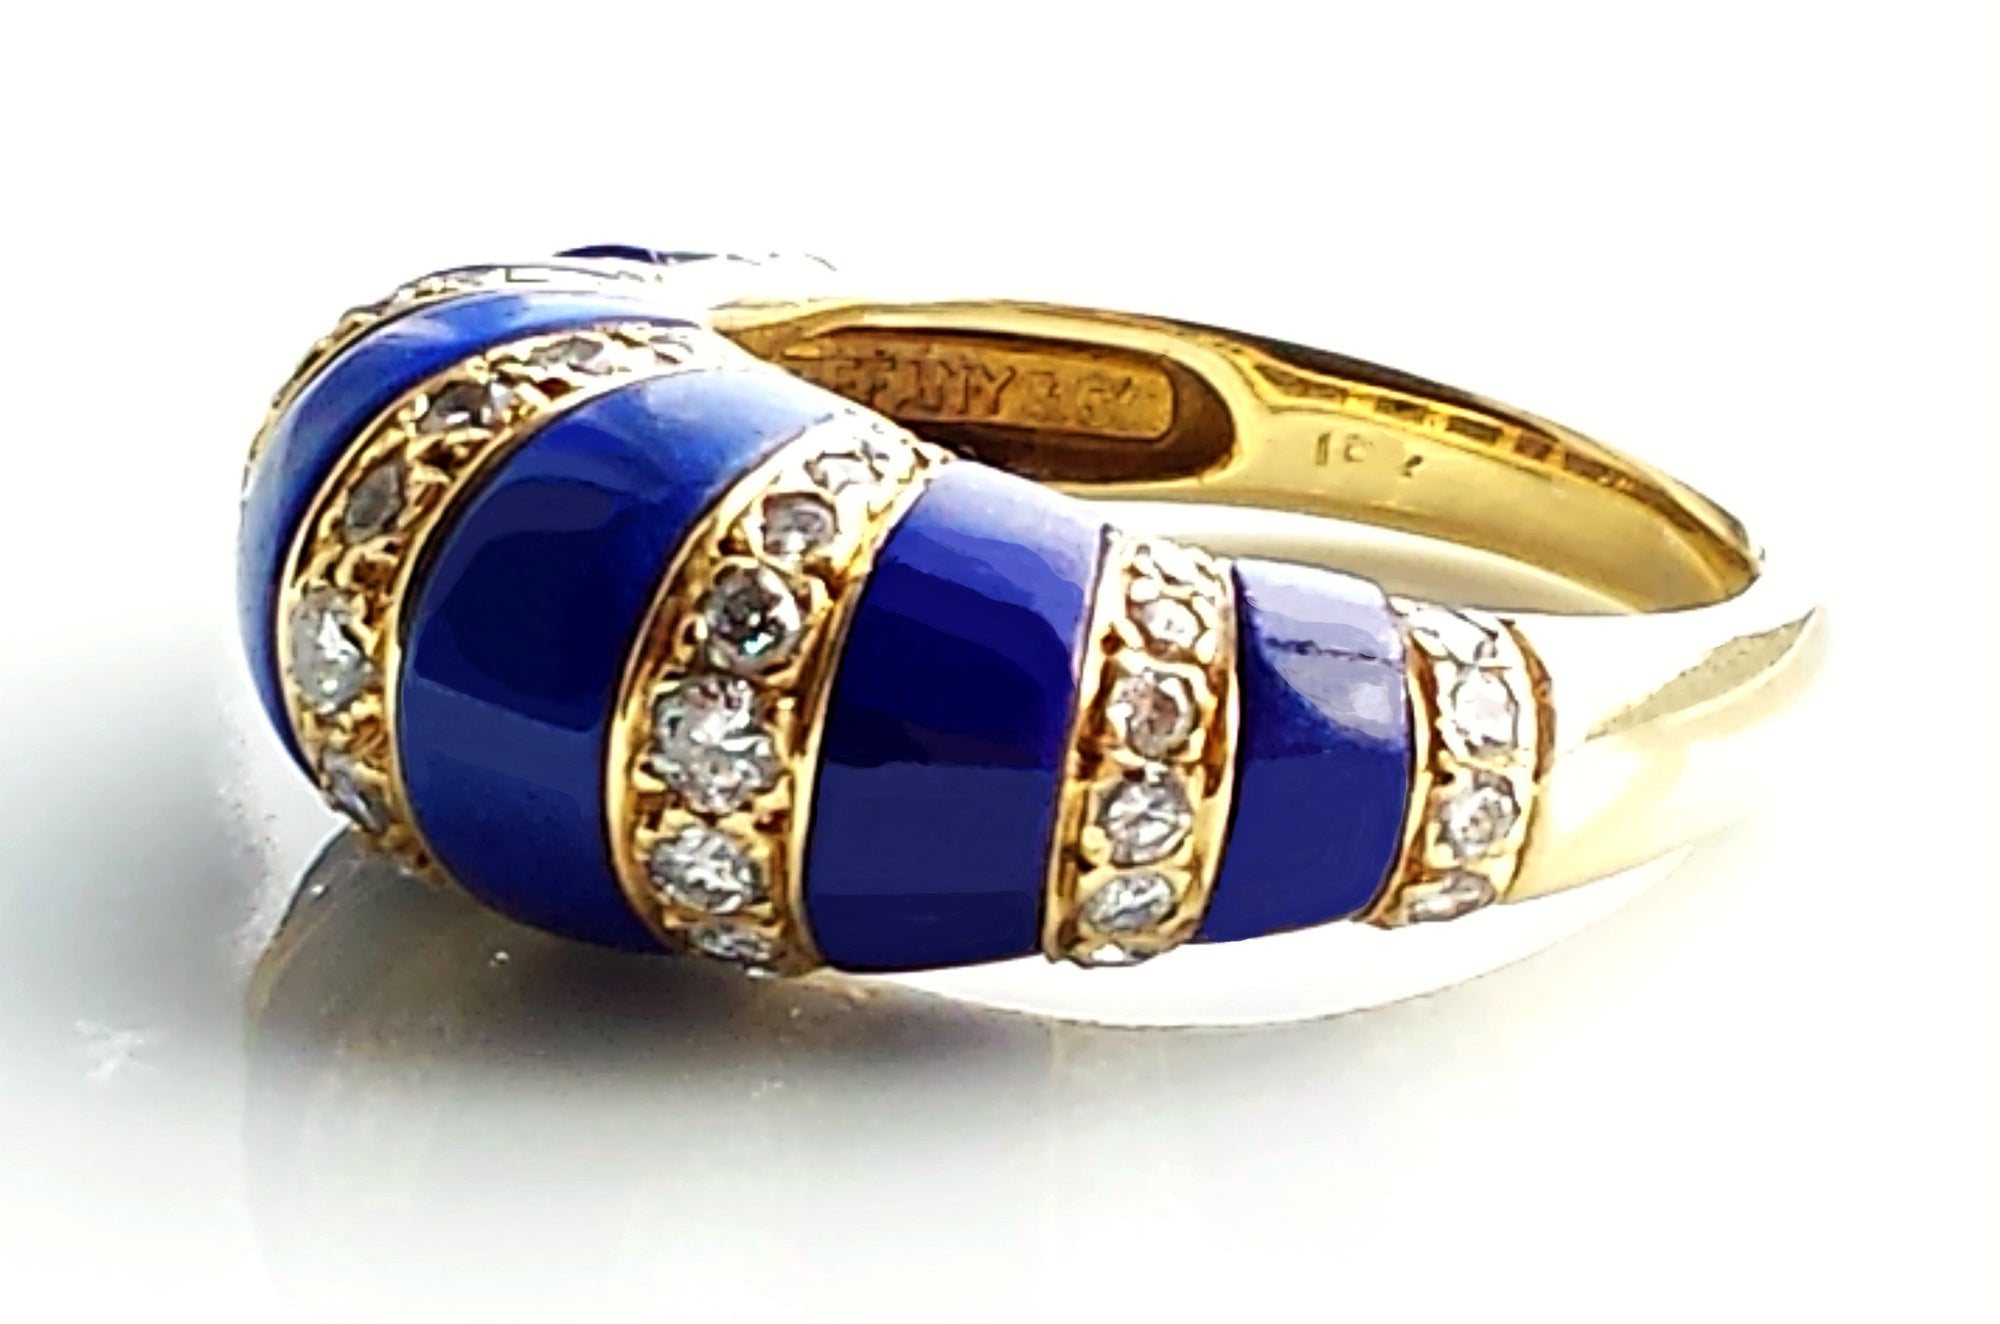 Vintage 1950s Mid Century Tiffany & Co. Lapis Lazuli & Diamond Bombe Cocktail / Dress Ring in 18K Yellow Gold